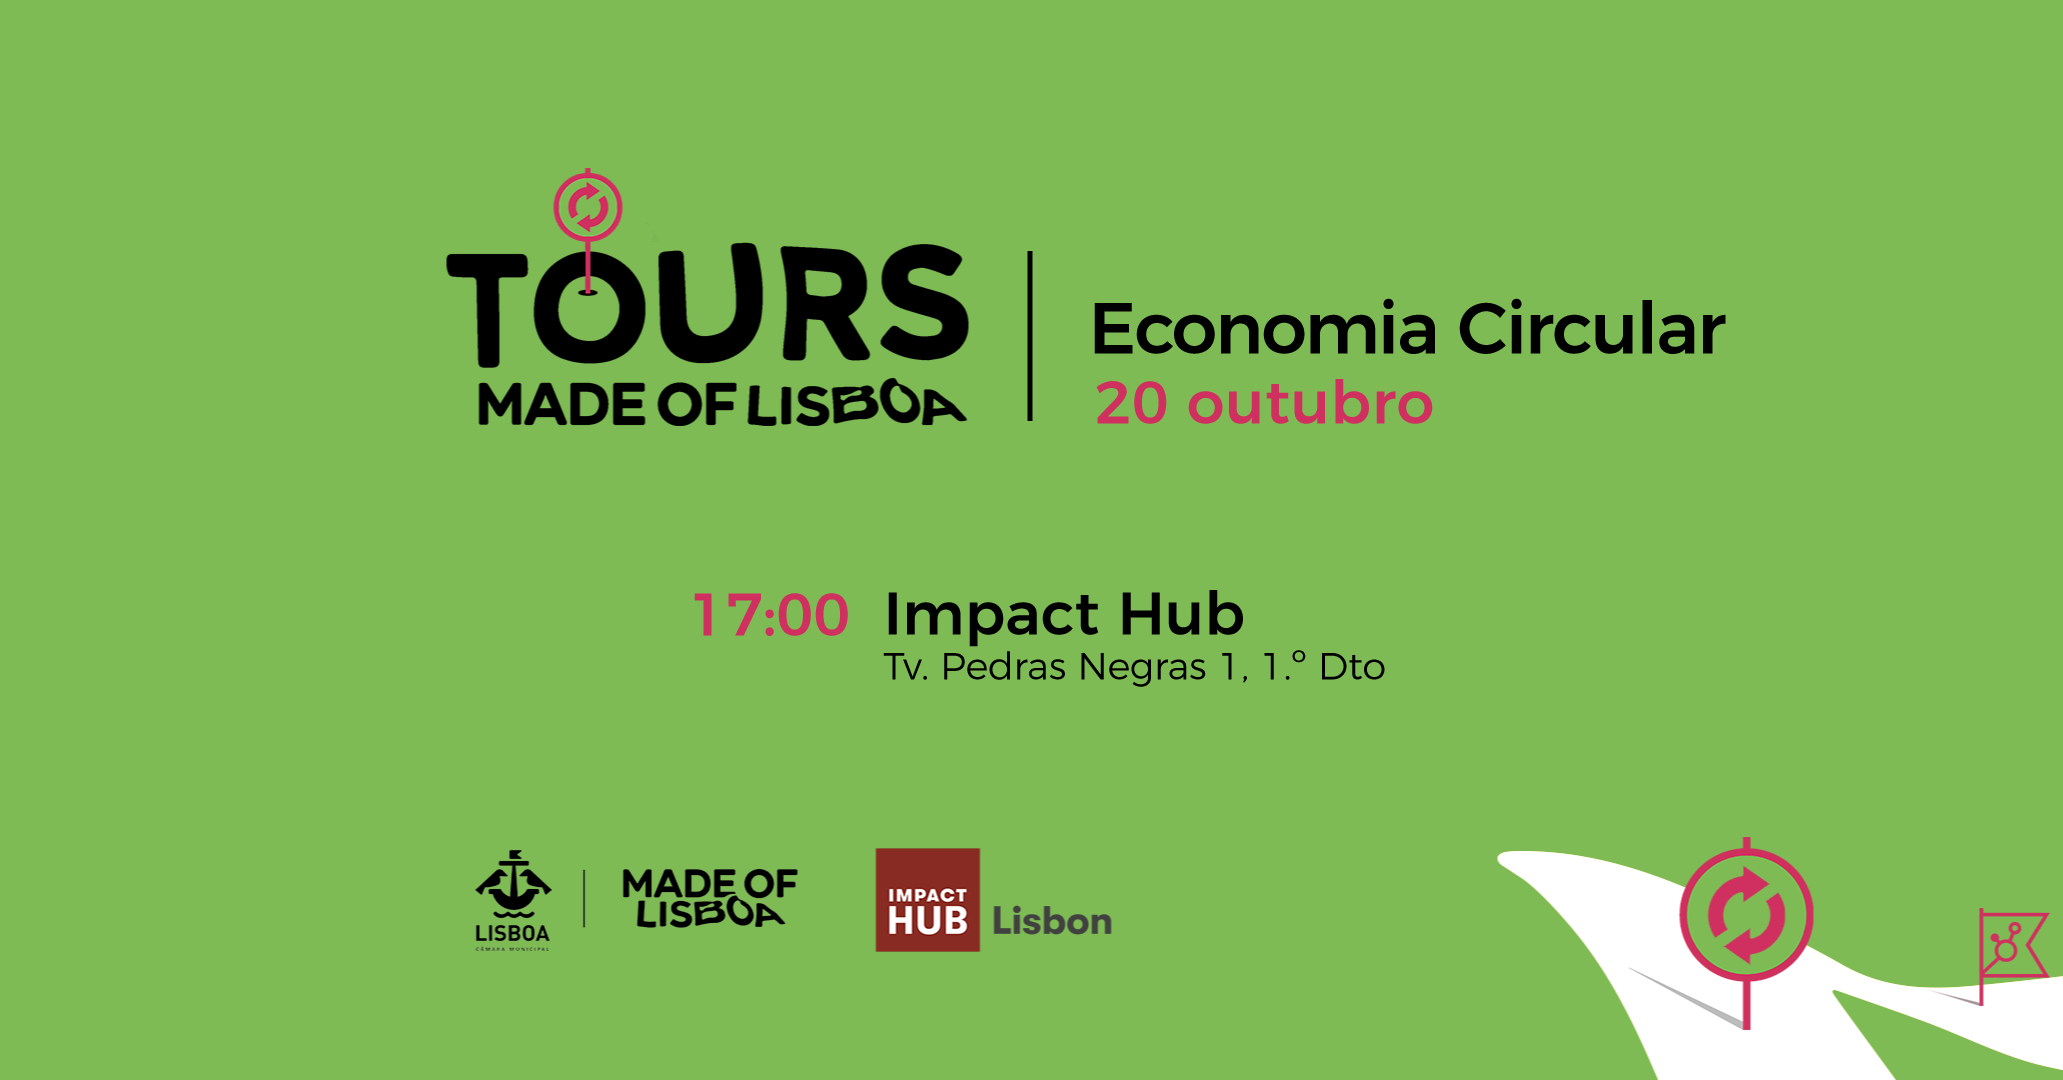 Tour Made of Lisboa – Circular Economy